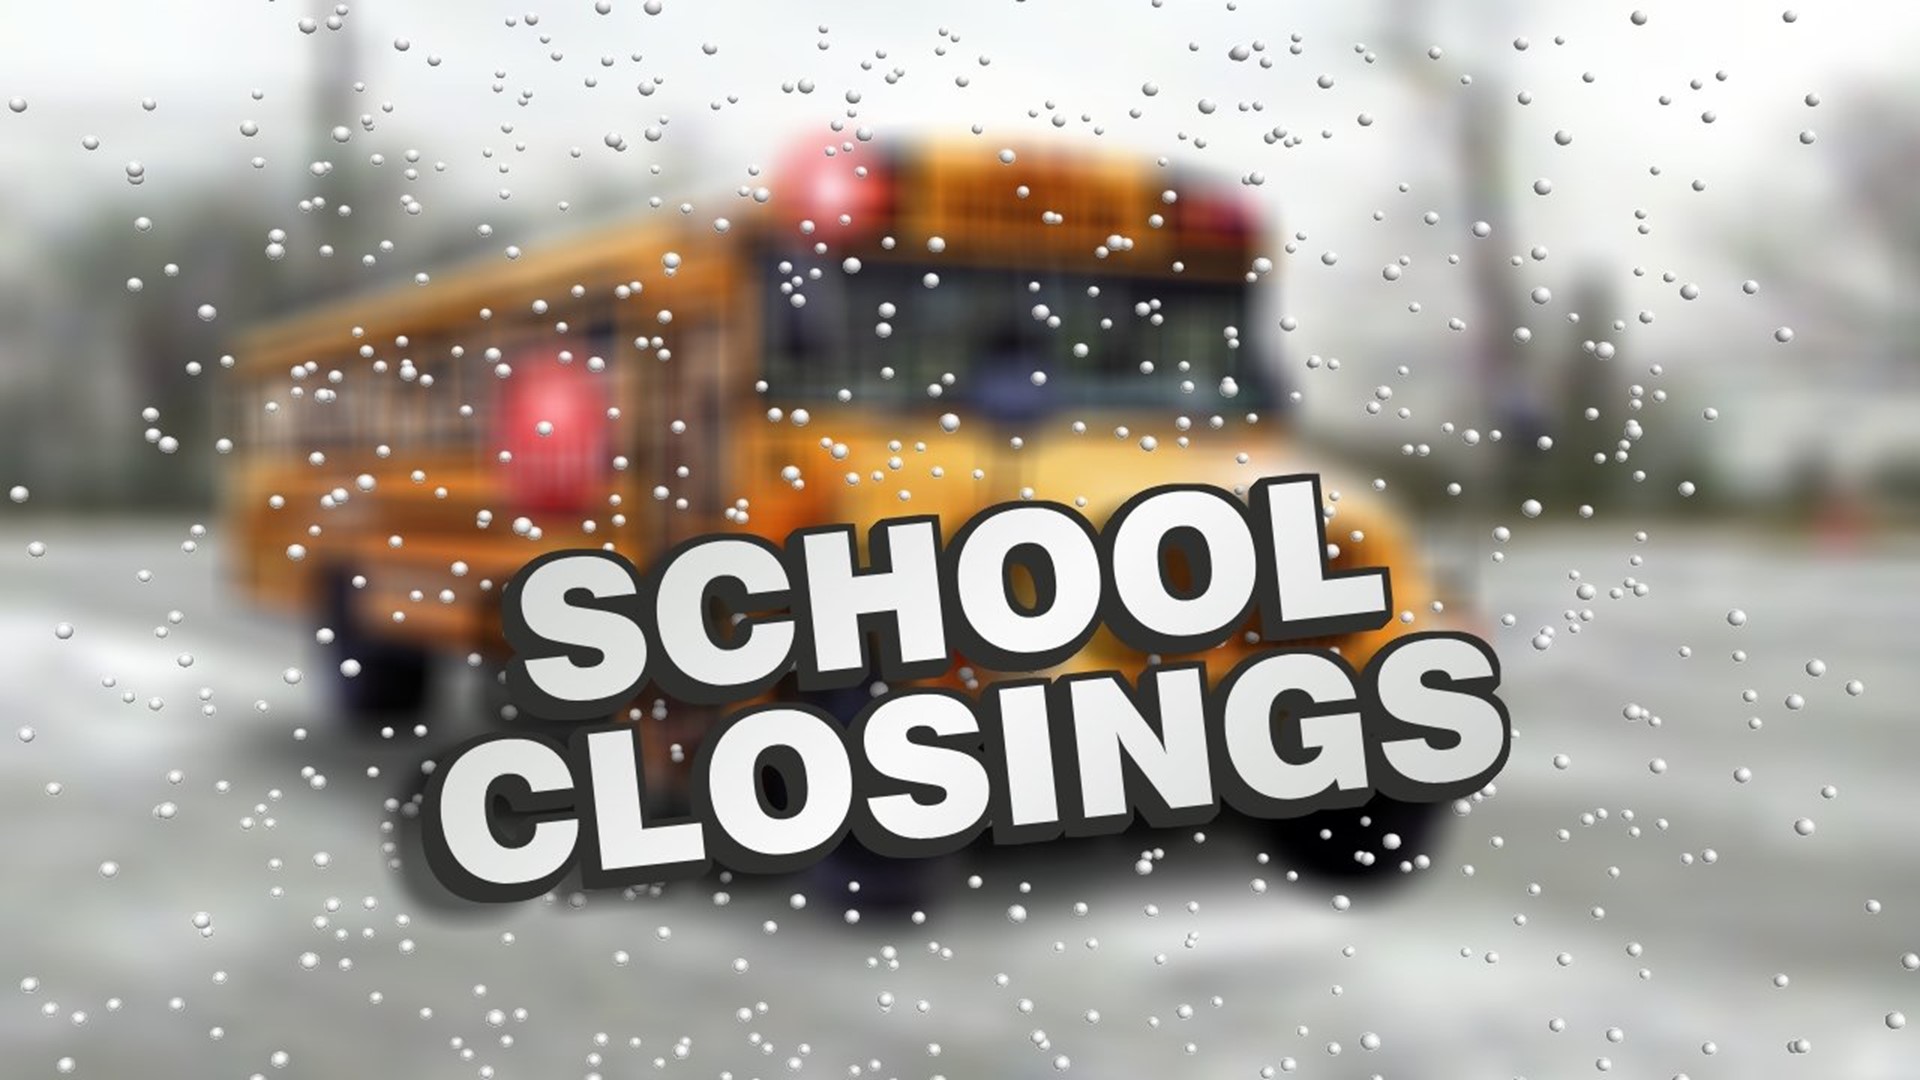 wayne township school closings and delays